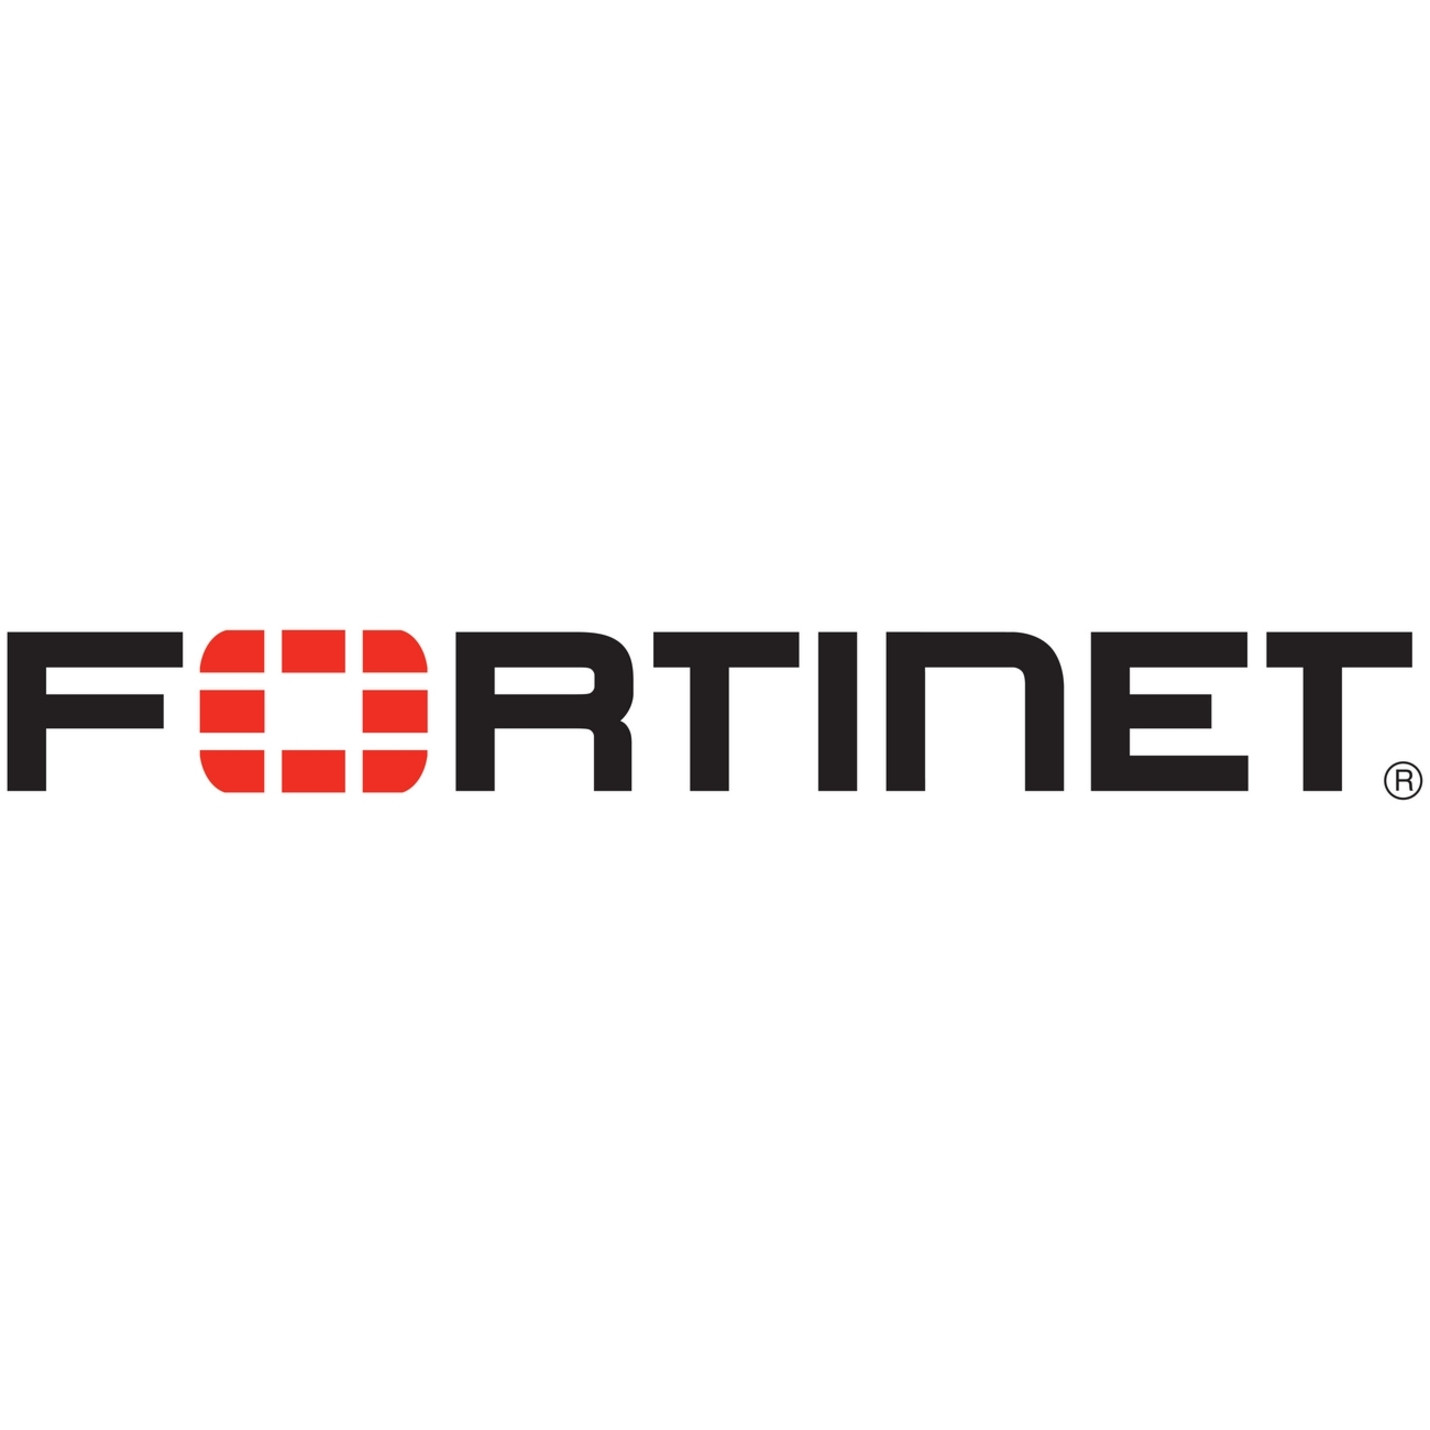 Fortinet Enterprise Bundle (FortiCare plus NGFW, AV, Web Filtering, Antispam, Botnet IP/Domain, FortiSandbox Cloud and Mobile Secu… FC-10-0091E-871-0…